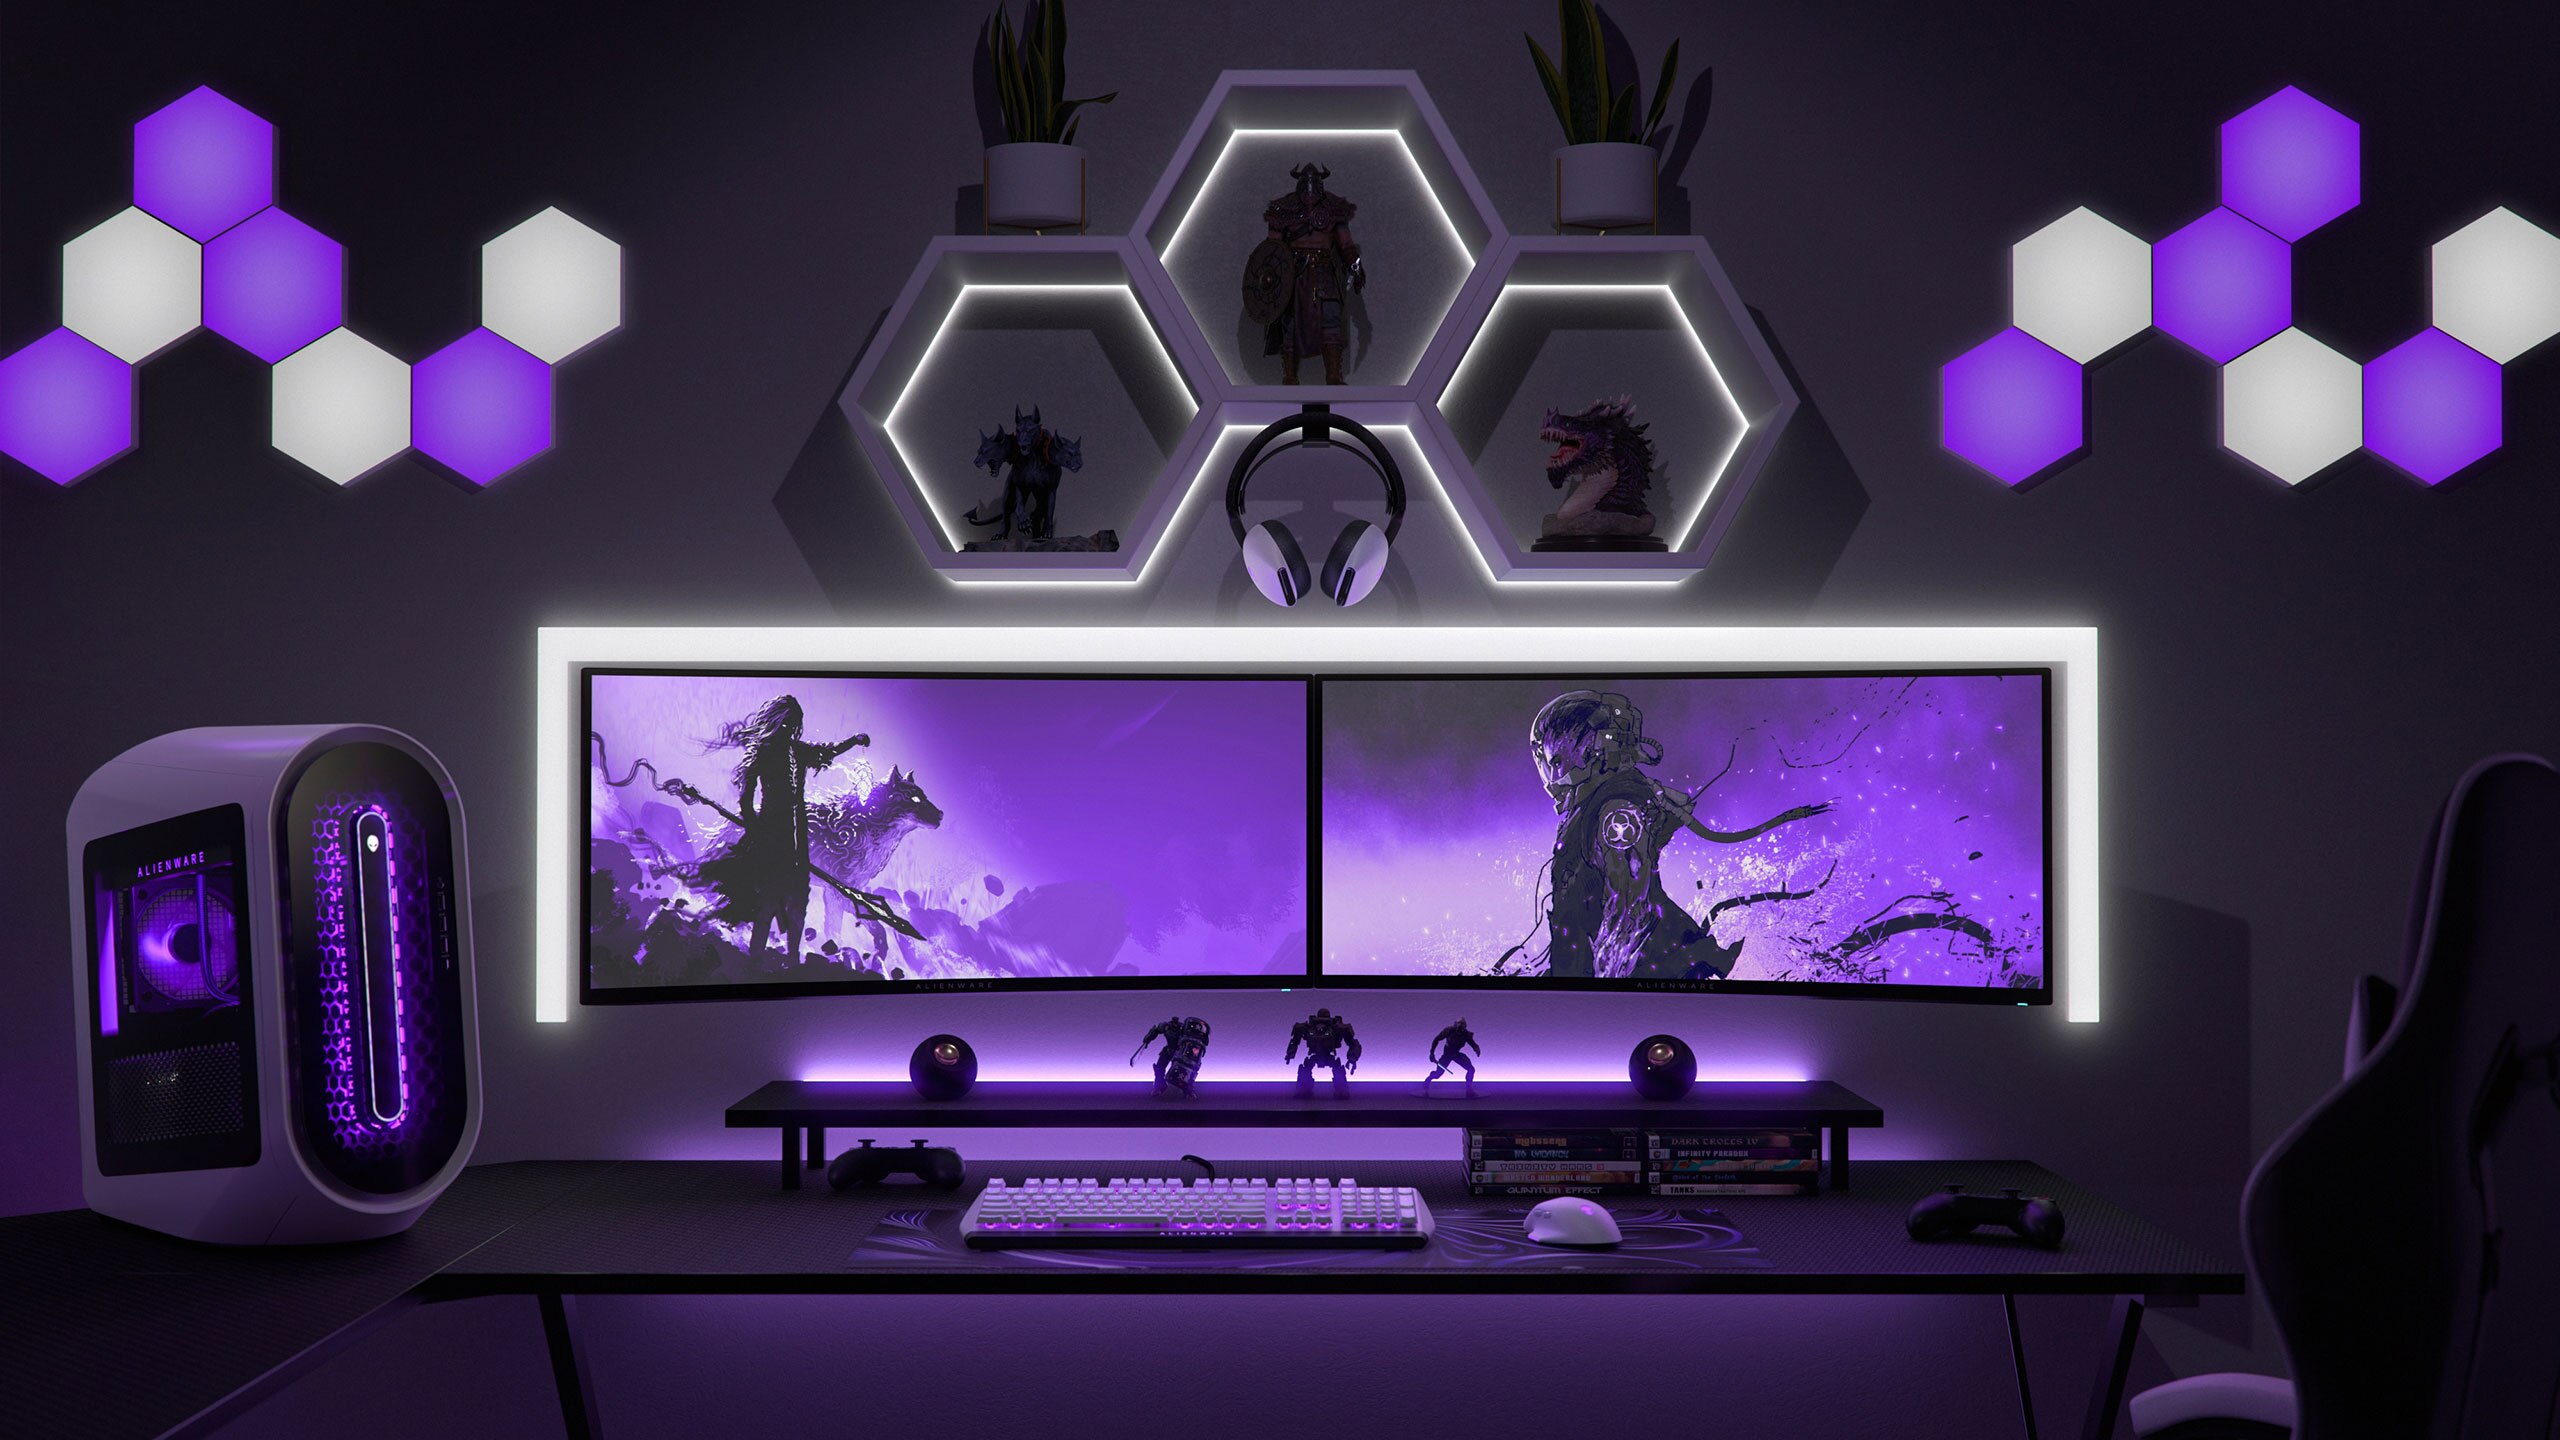 alienware wallpaper purple